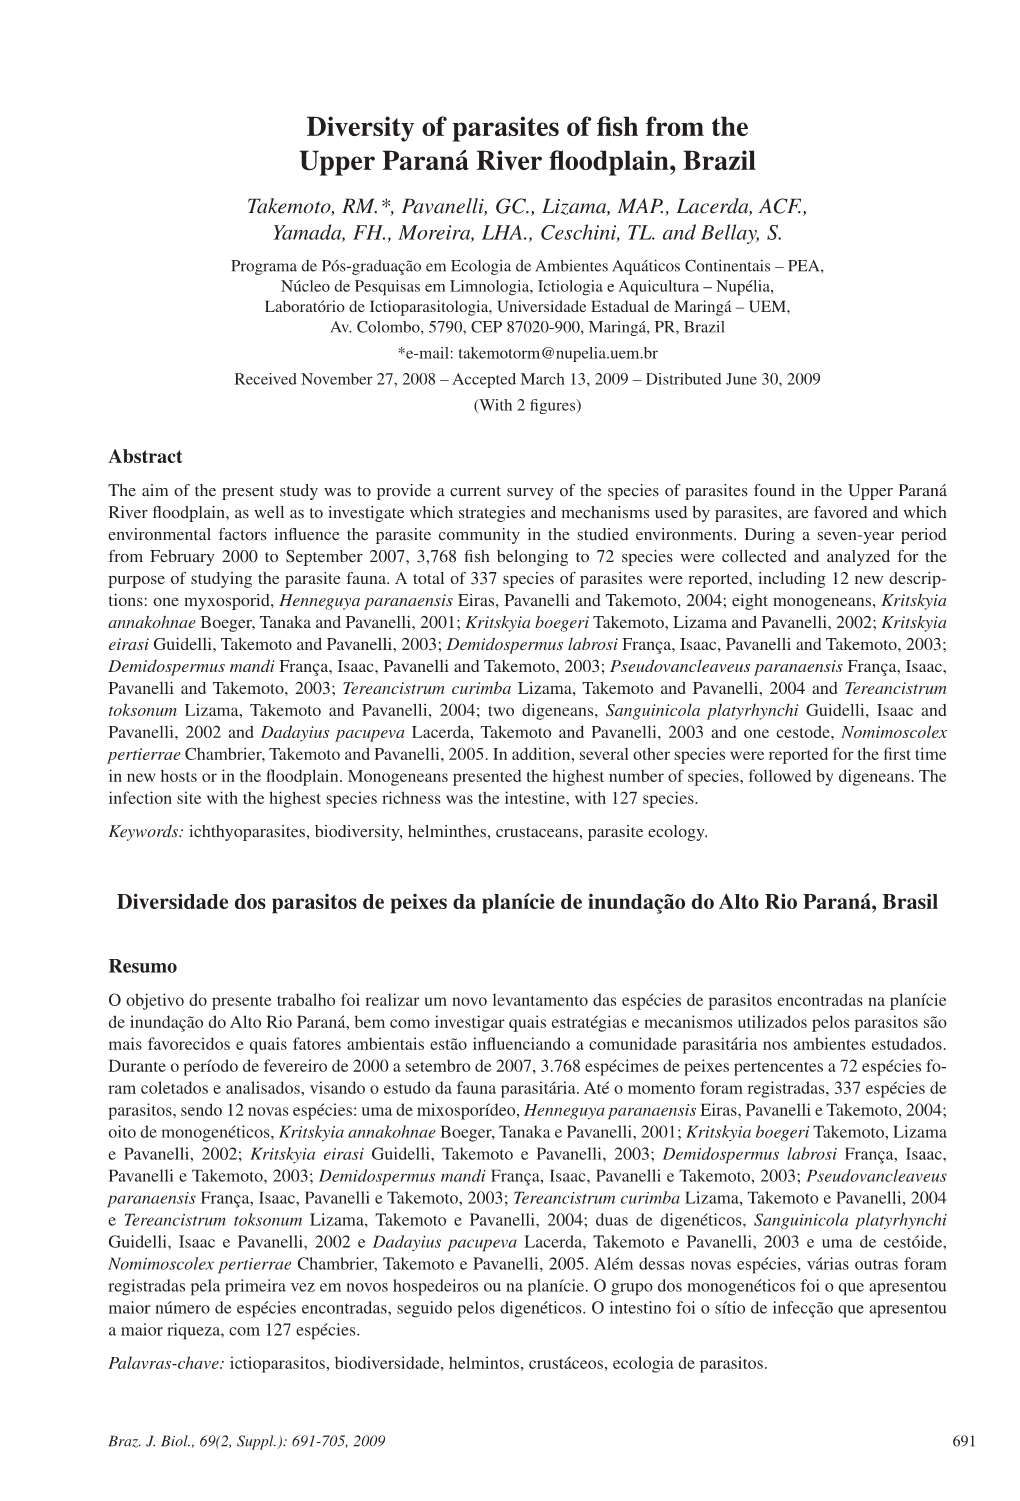 Diversity of Parasites of Fish from the Upper Paraná River Floodplain, Brazil